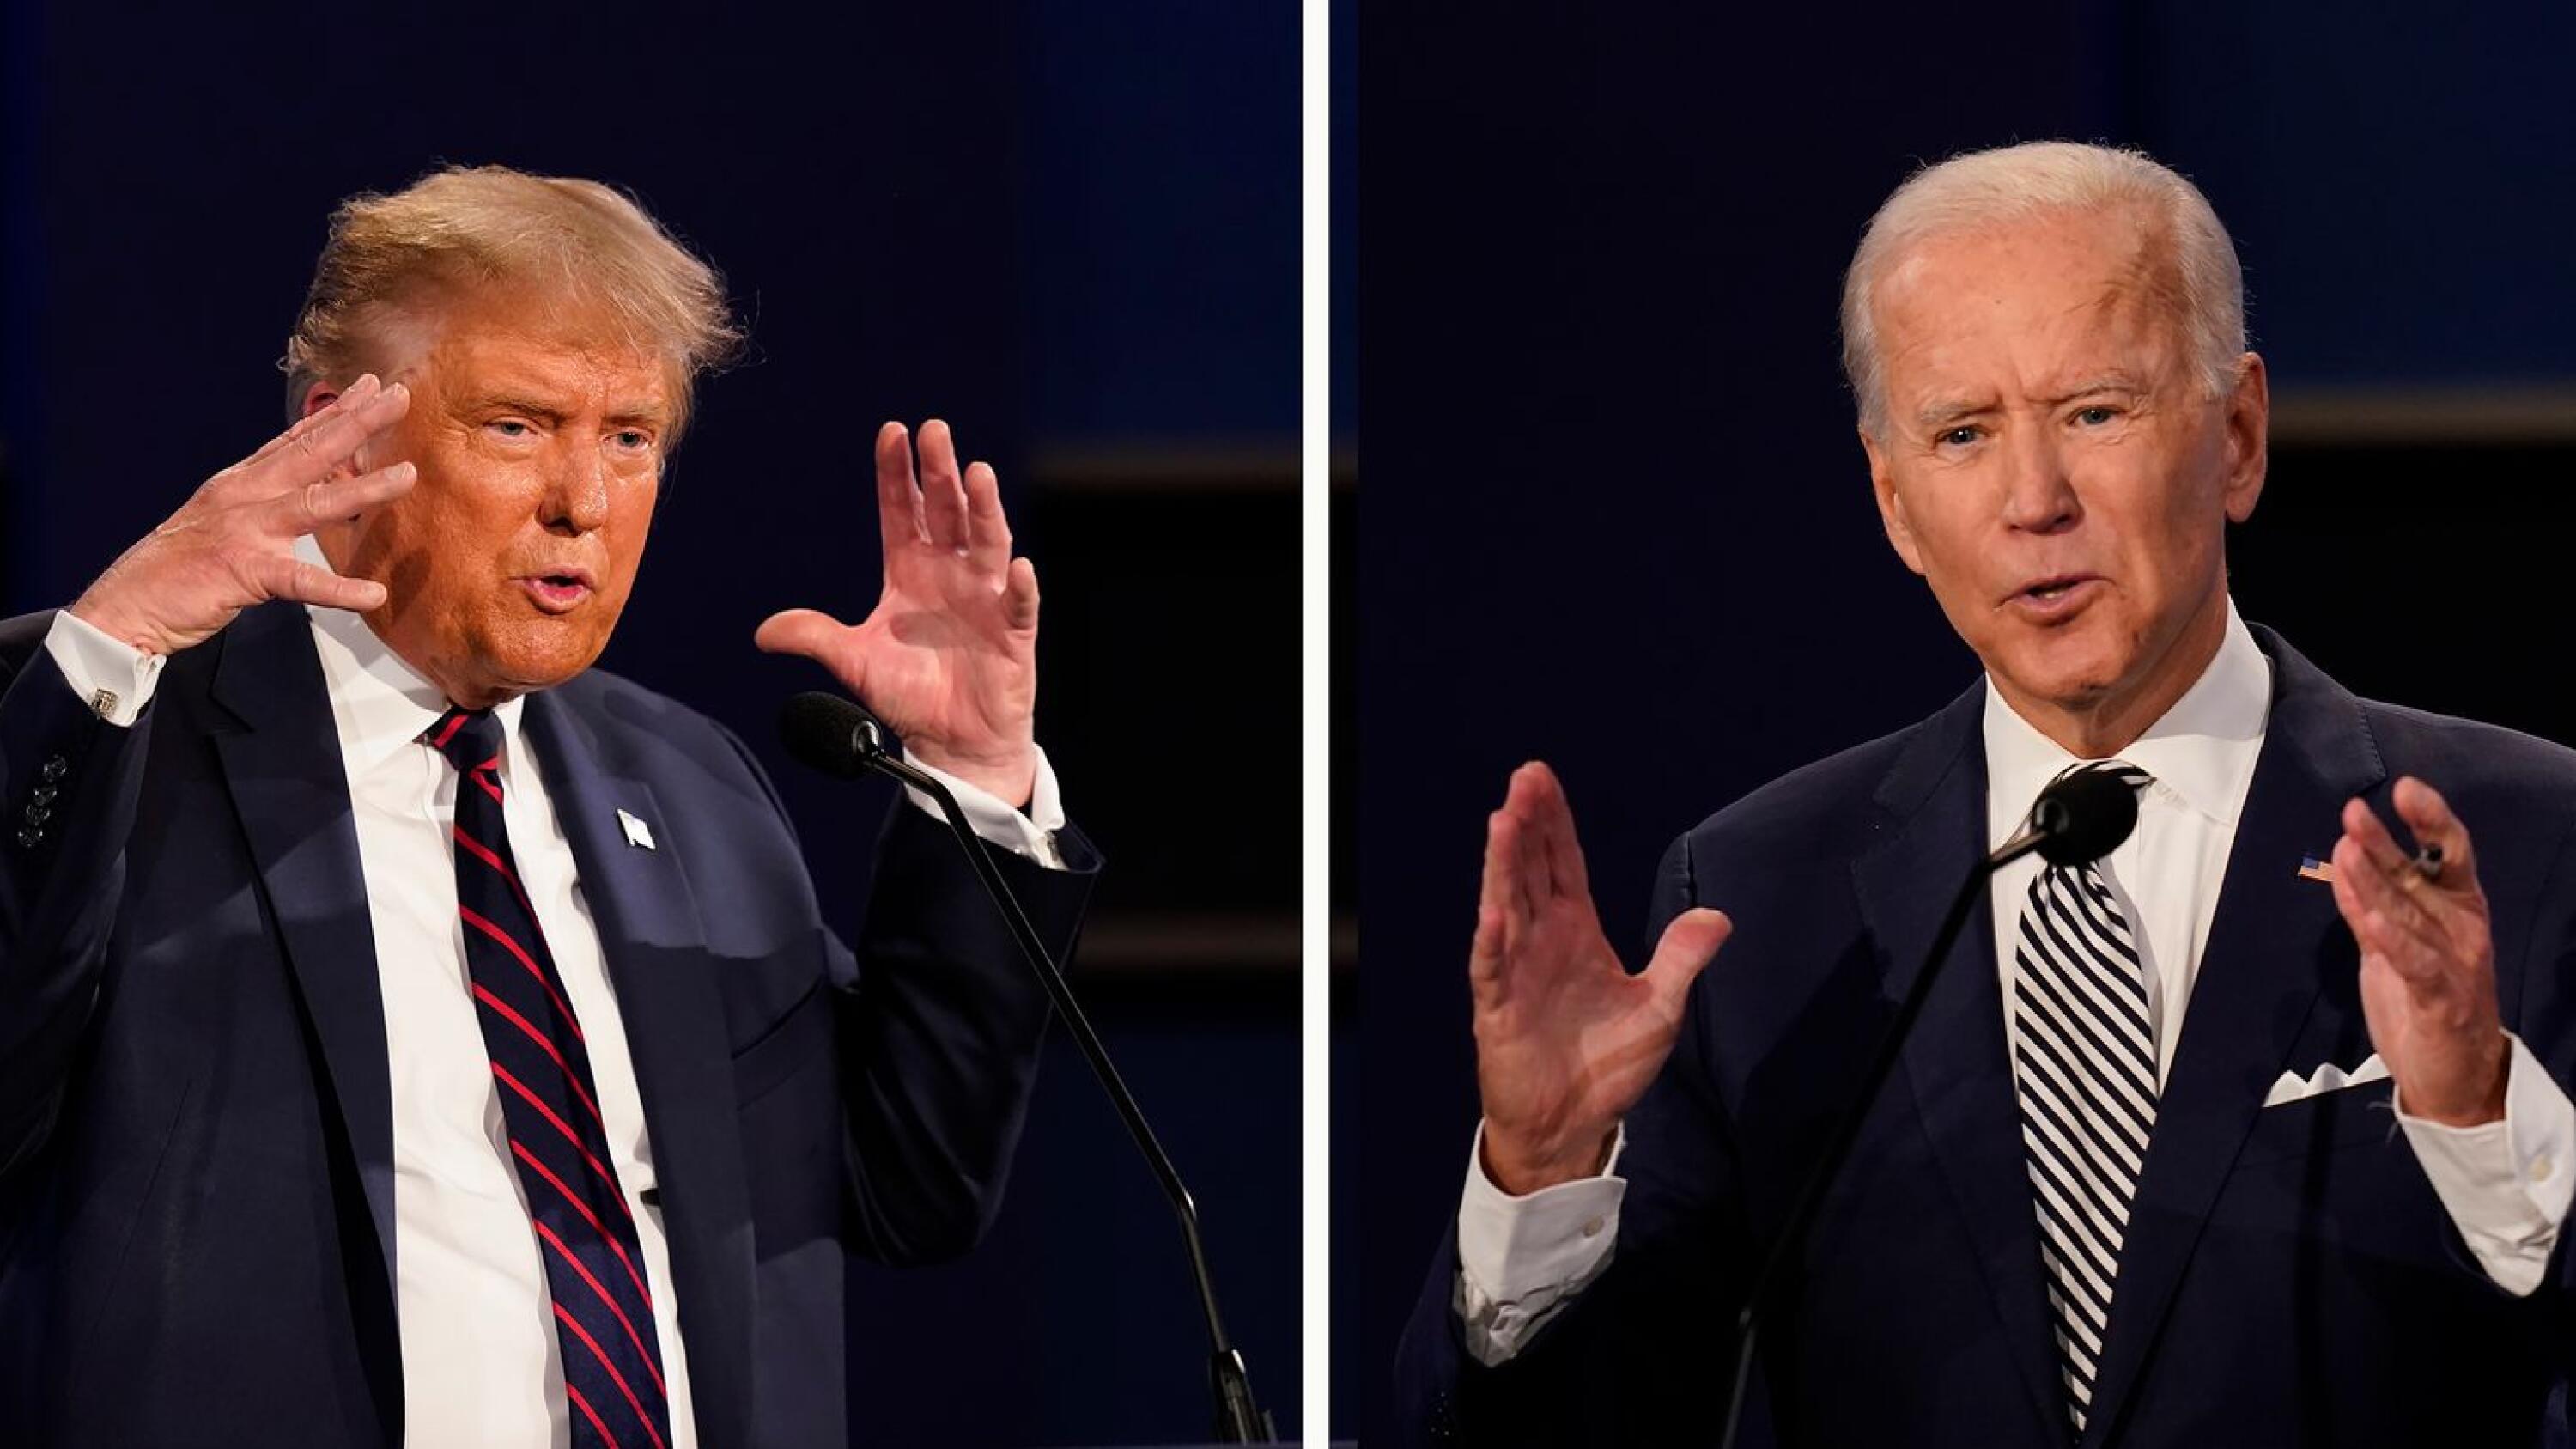 Trump, Biden prep for debate where any misstep threatens hopes of victory